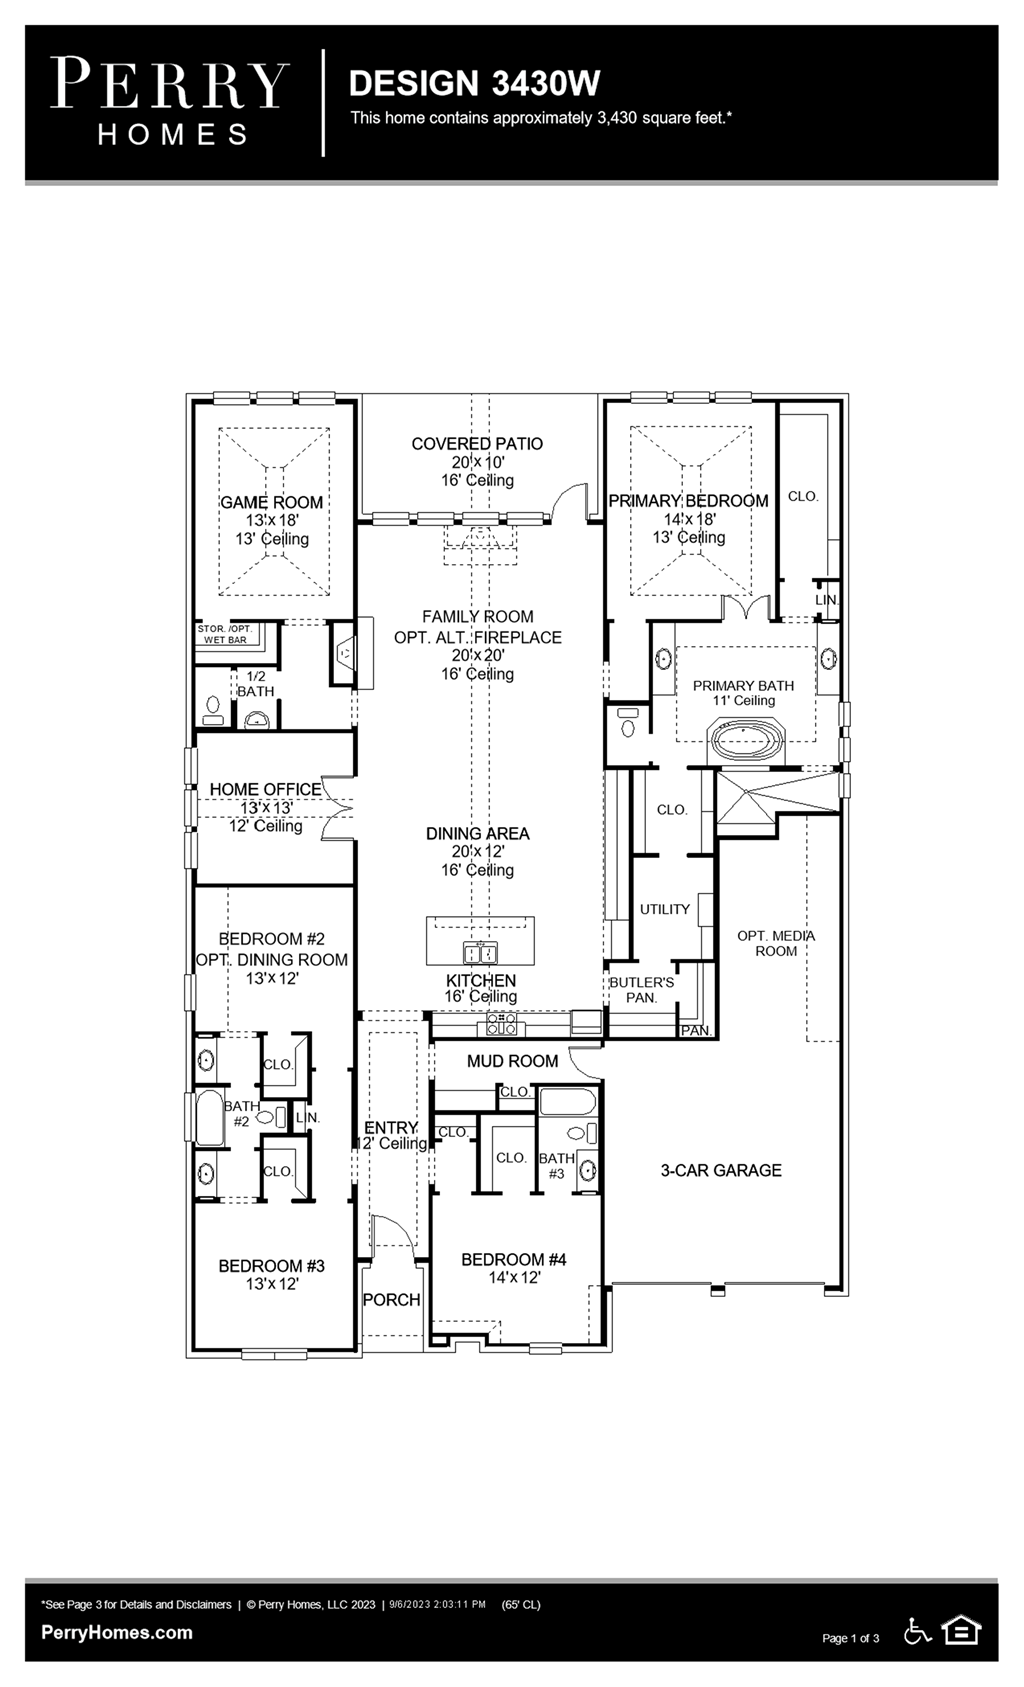 Floor Plan for 3430W